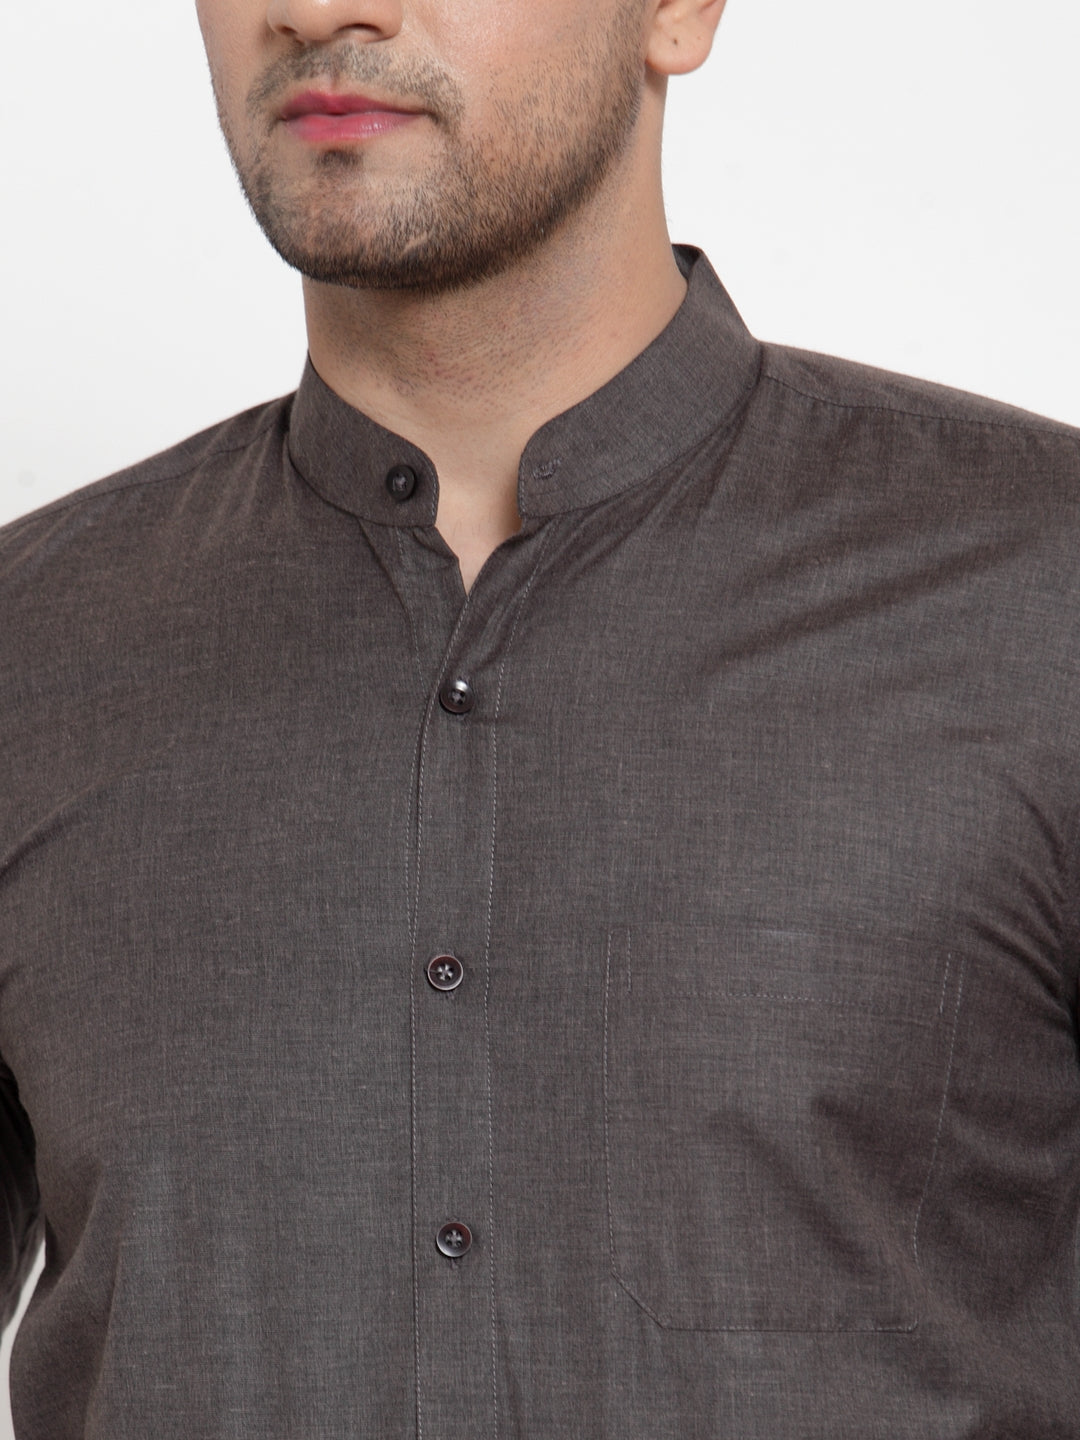 Men's Grey Melange Cotton Solid Mandarin Collar Formal Shirts ( SF 726Charcoal ) - Jainish